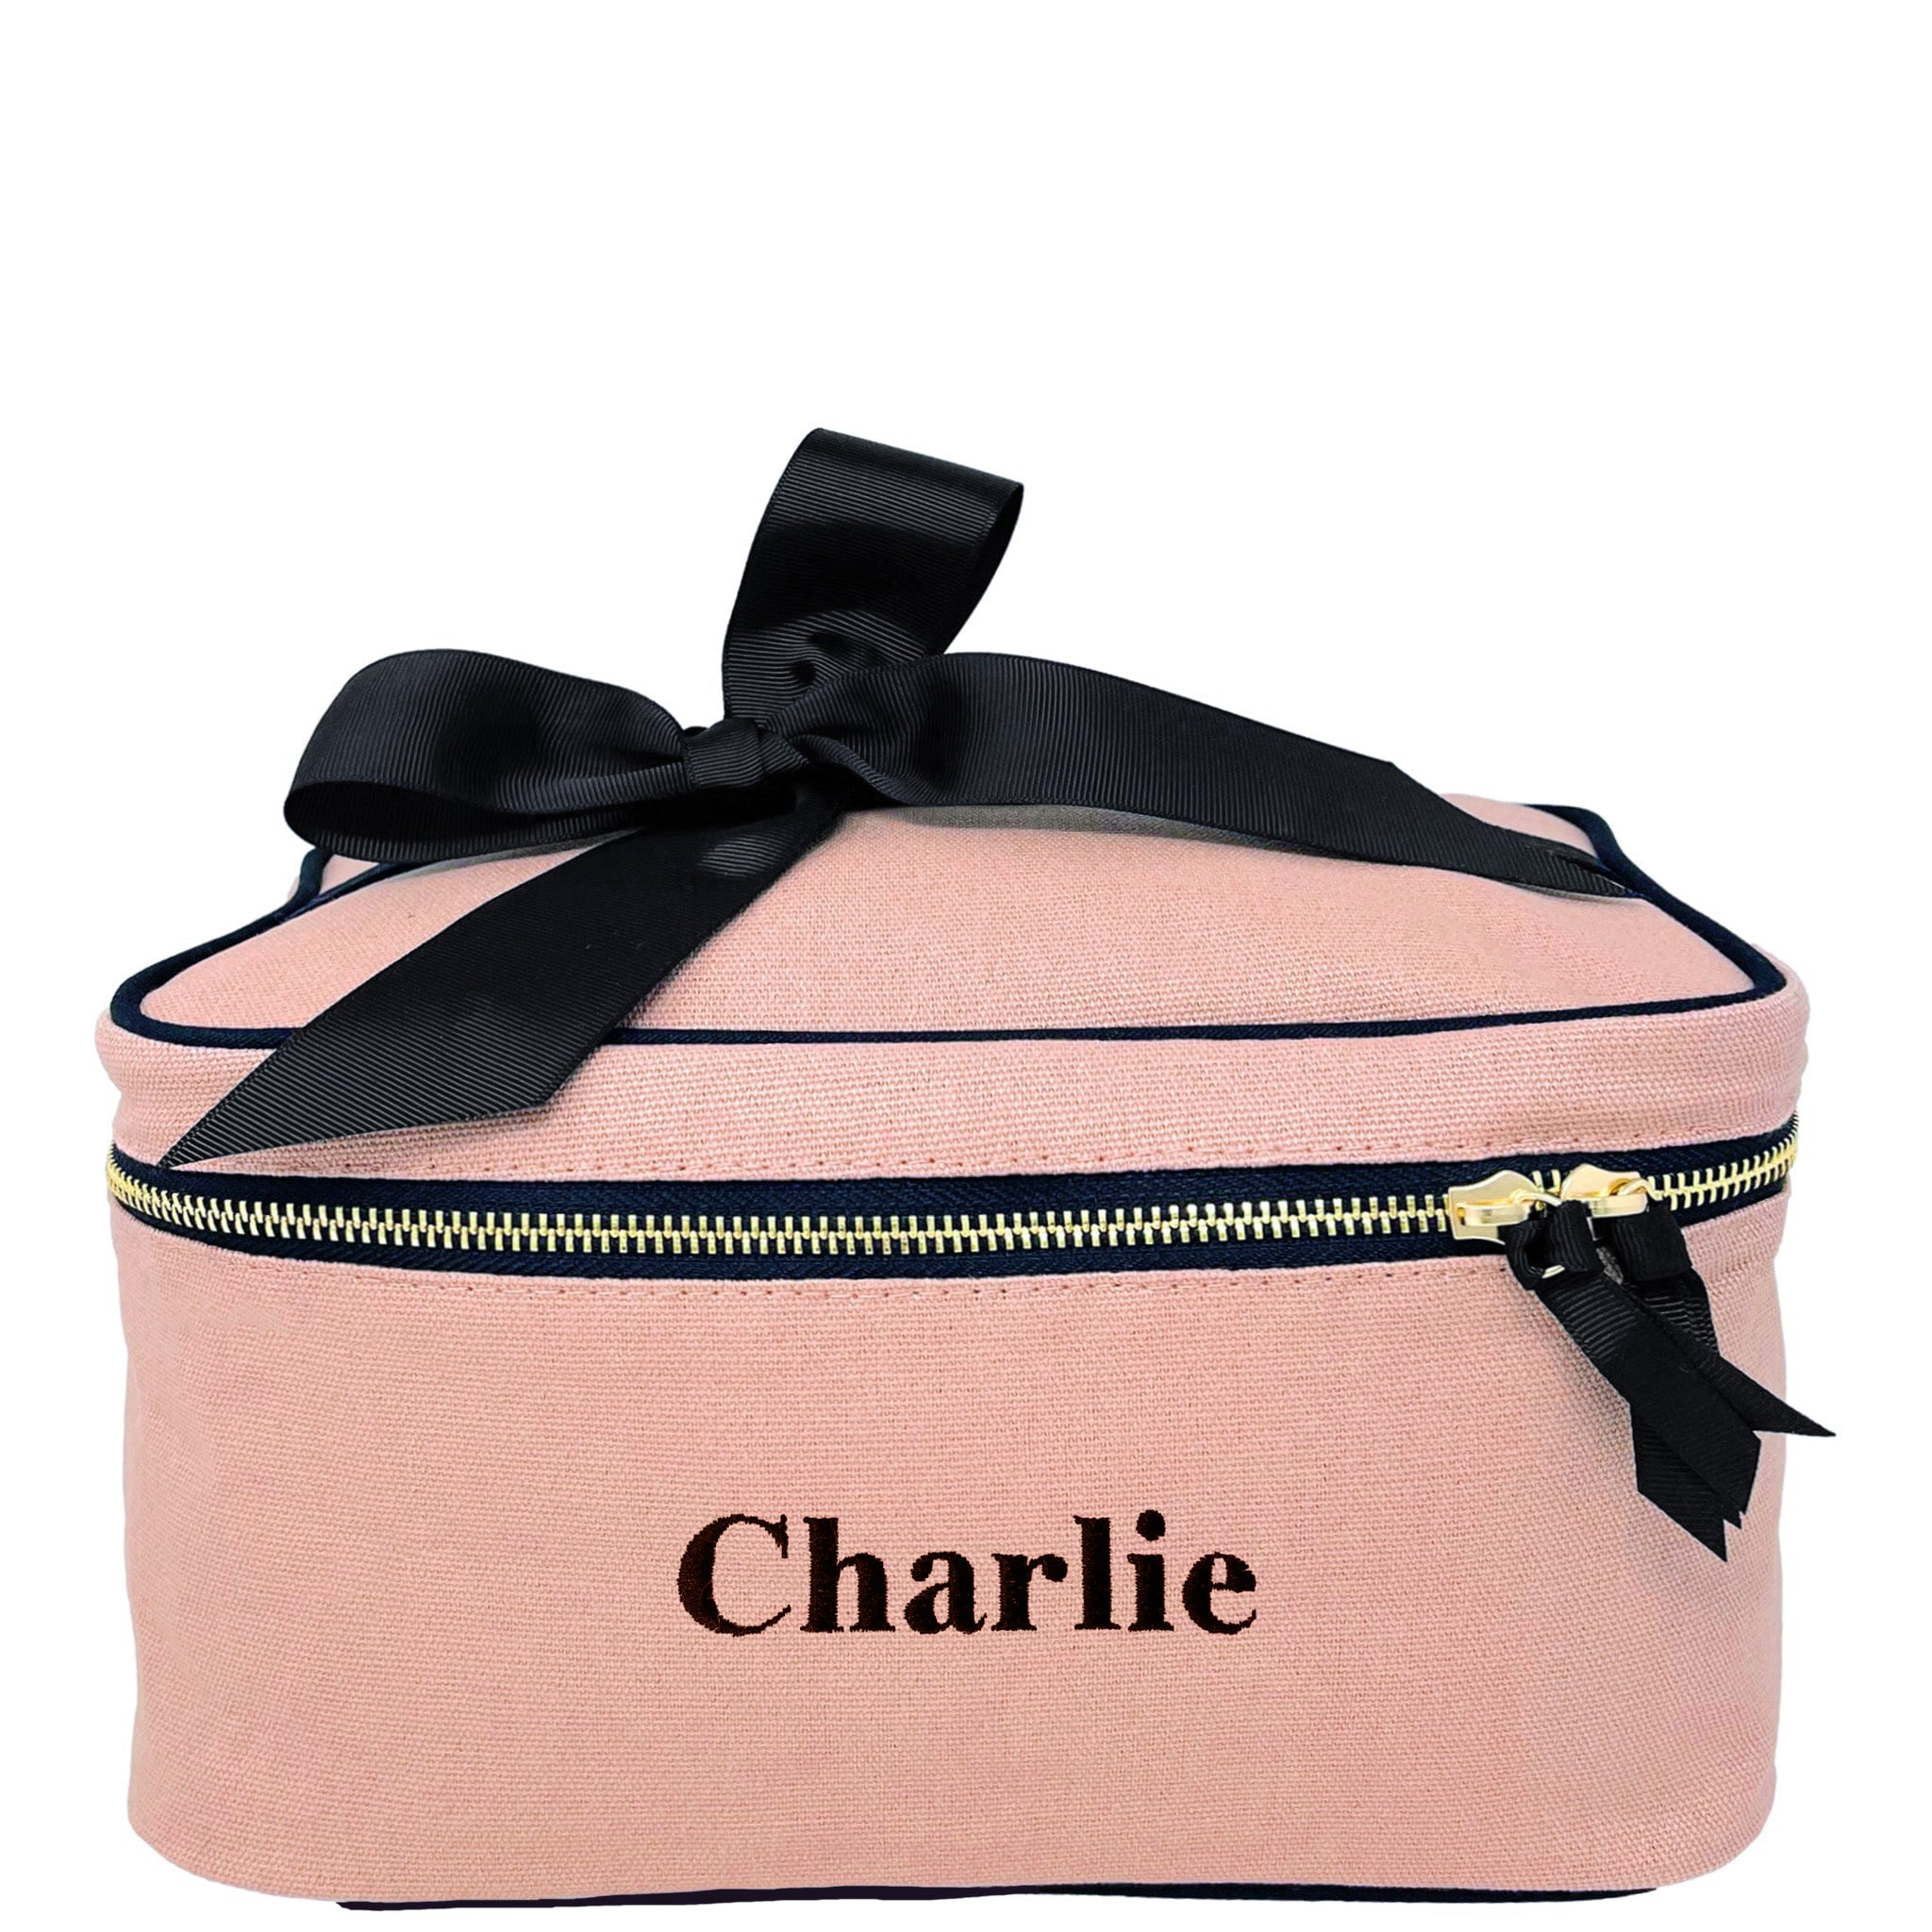 Case for Travel/Home/Makeup organizing - Customizable, Laminated Lining, Medium size, Pink Blush | Bag-all